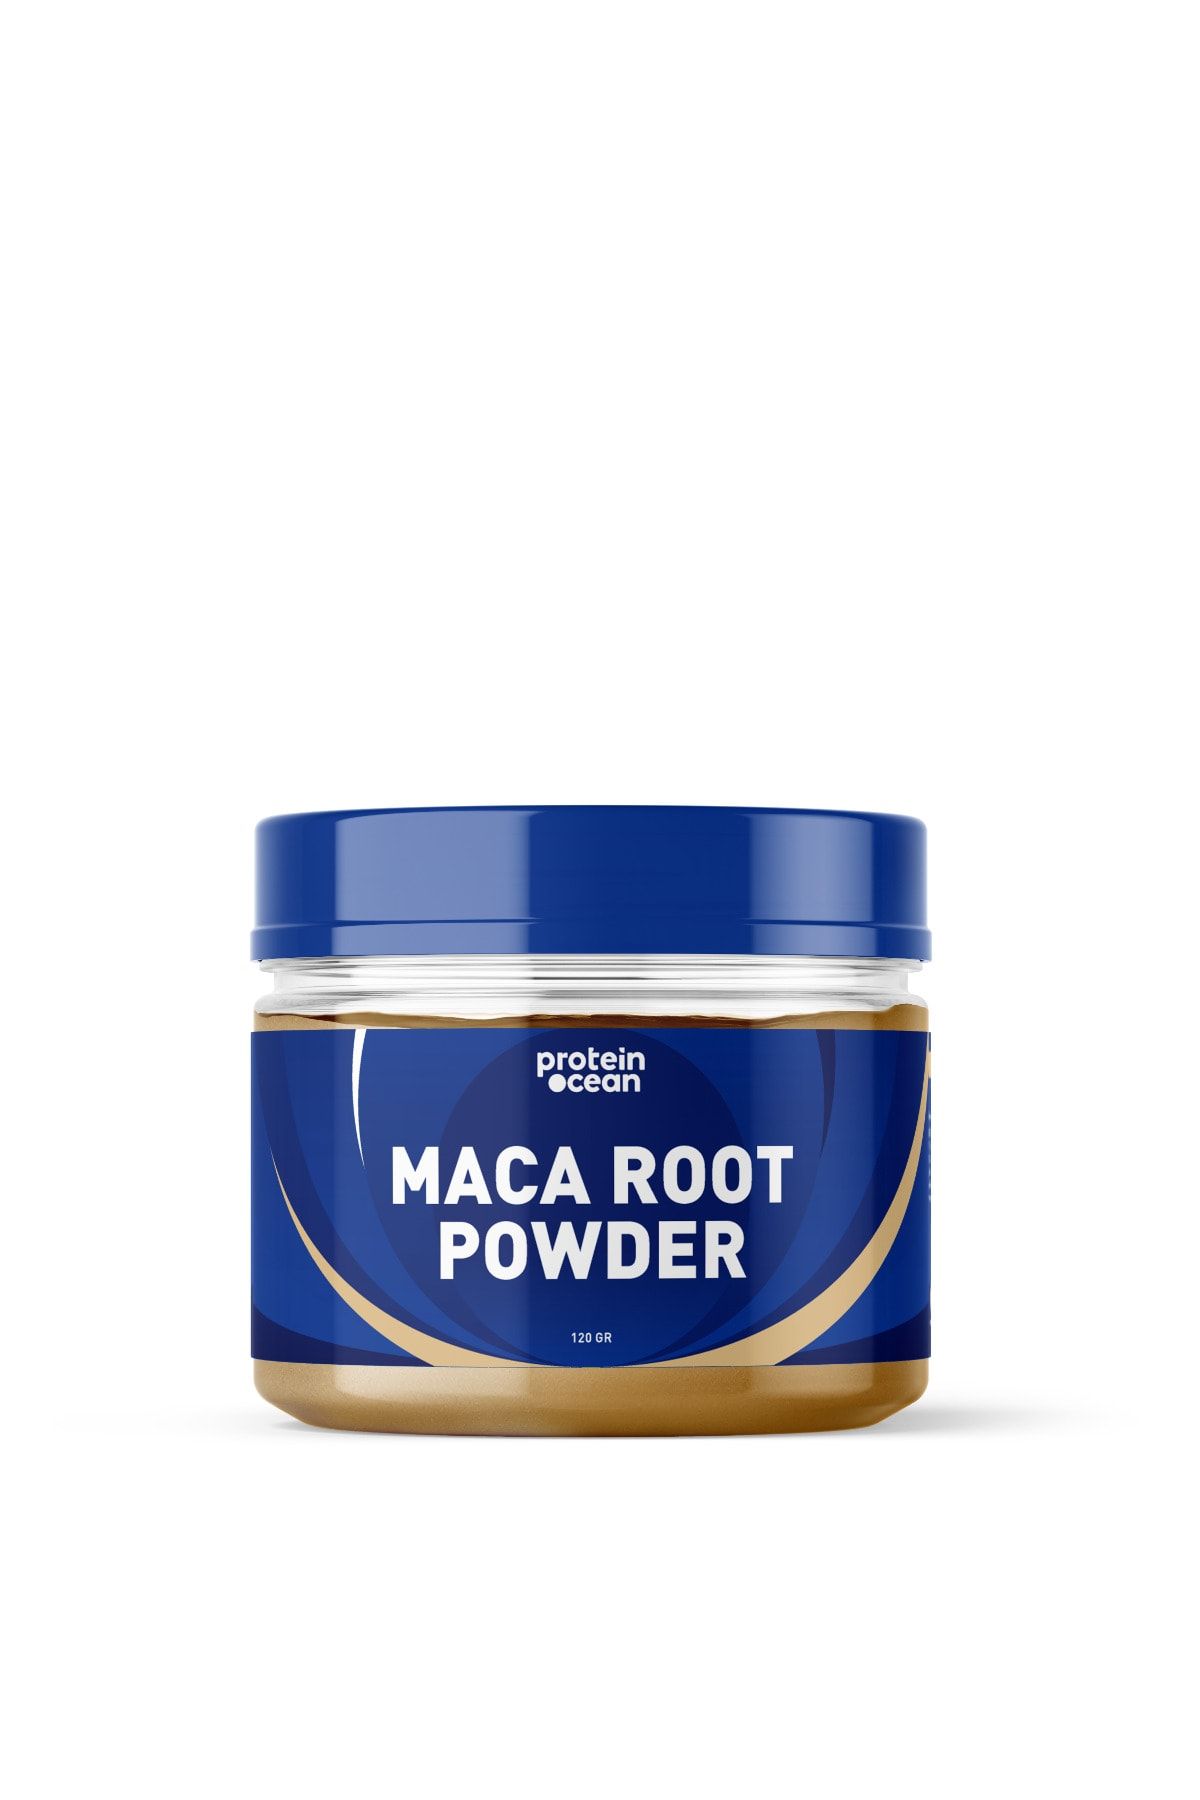 Proteinocean Maca Root Powder - 120g